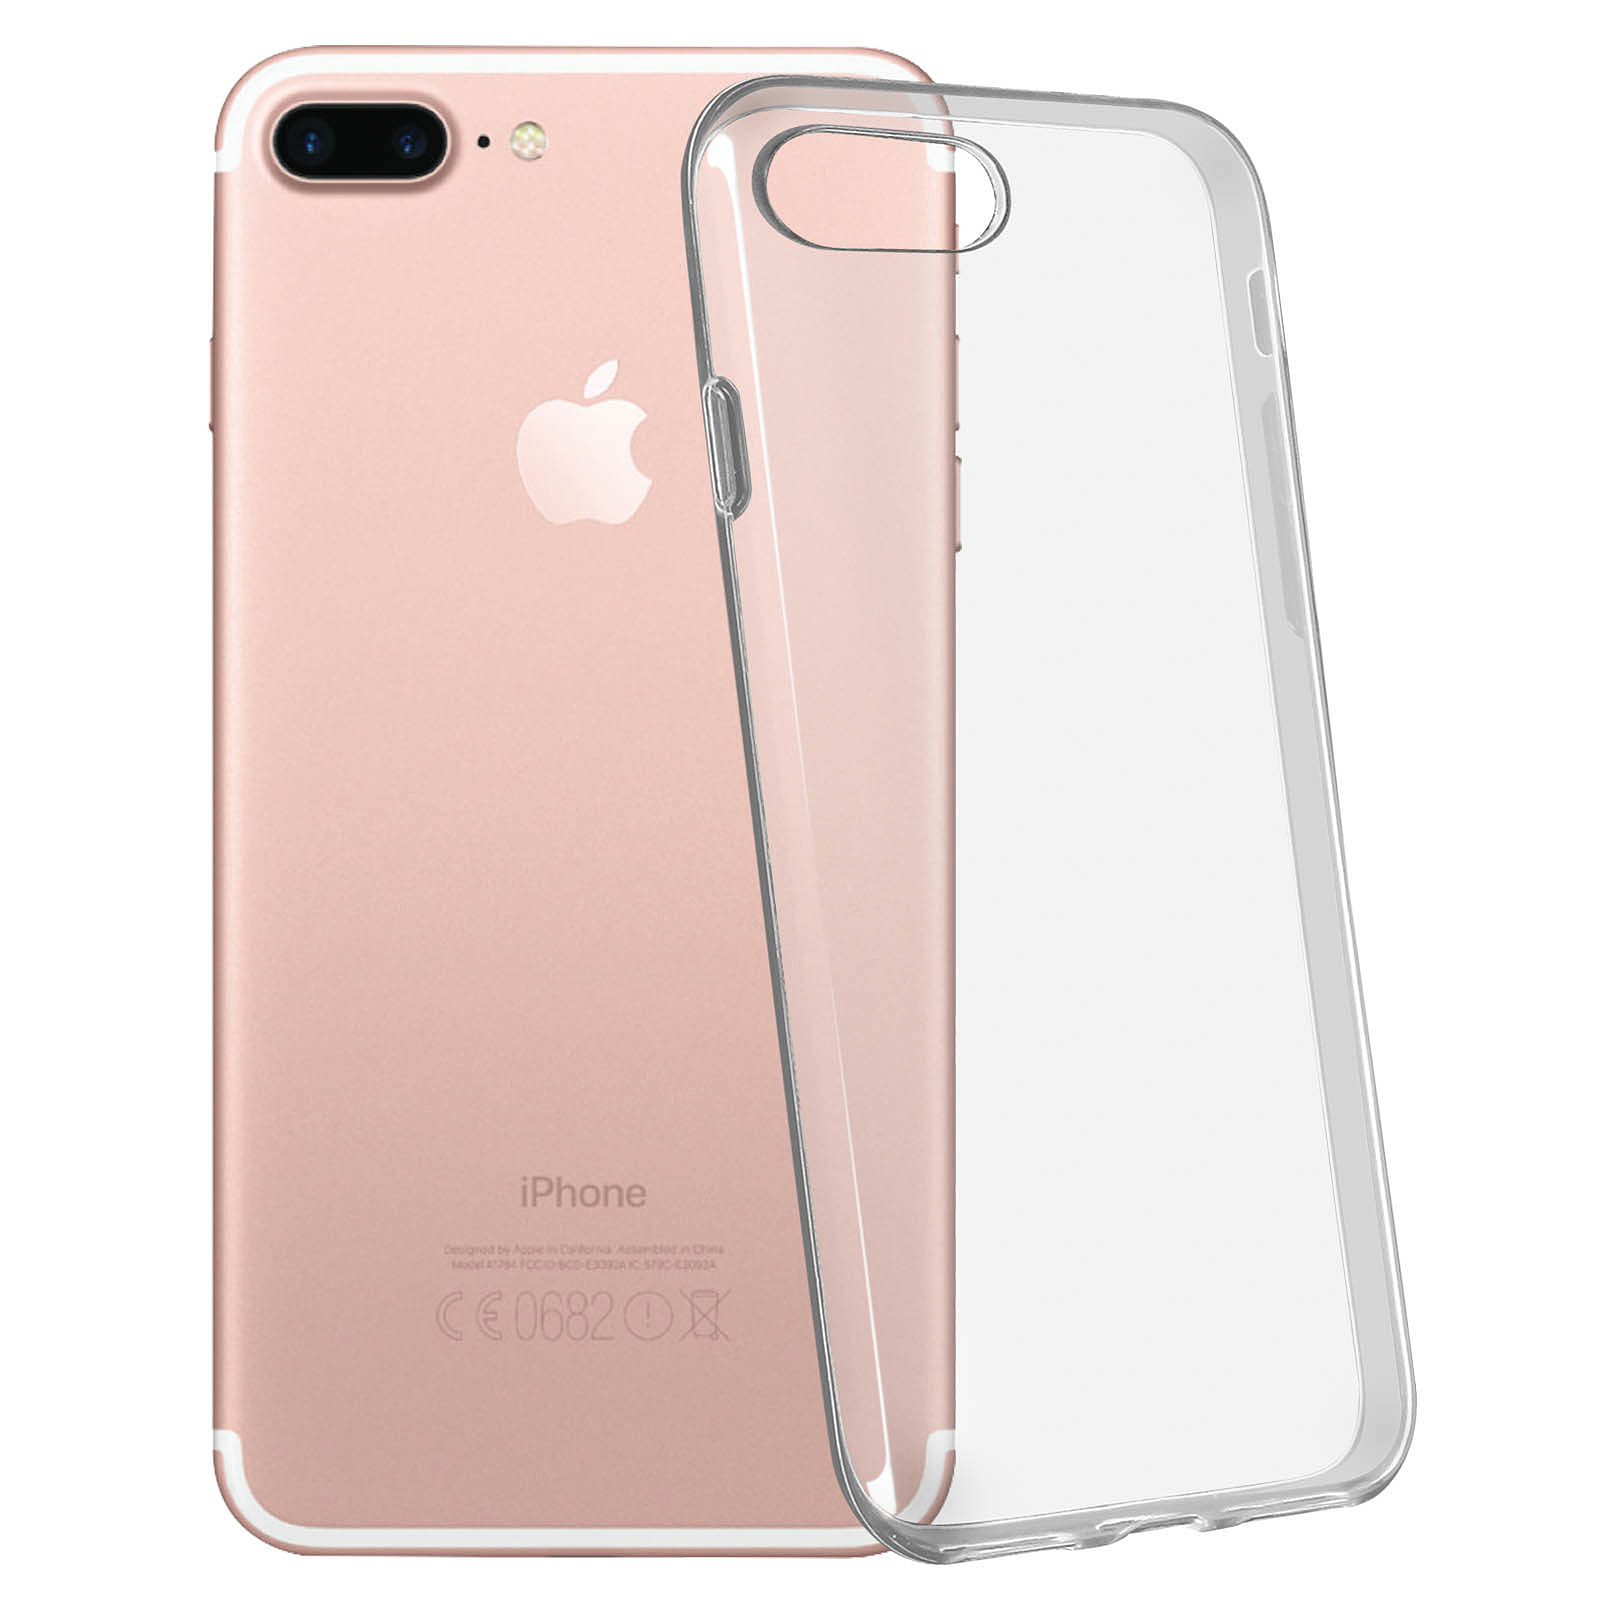 Avizar Coque iPhone 7 Plus / 8 Plus Protection silicone gel ultra-fine transparente - Coque telephone Avizar